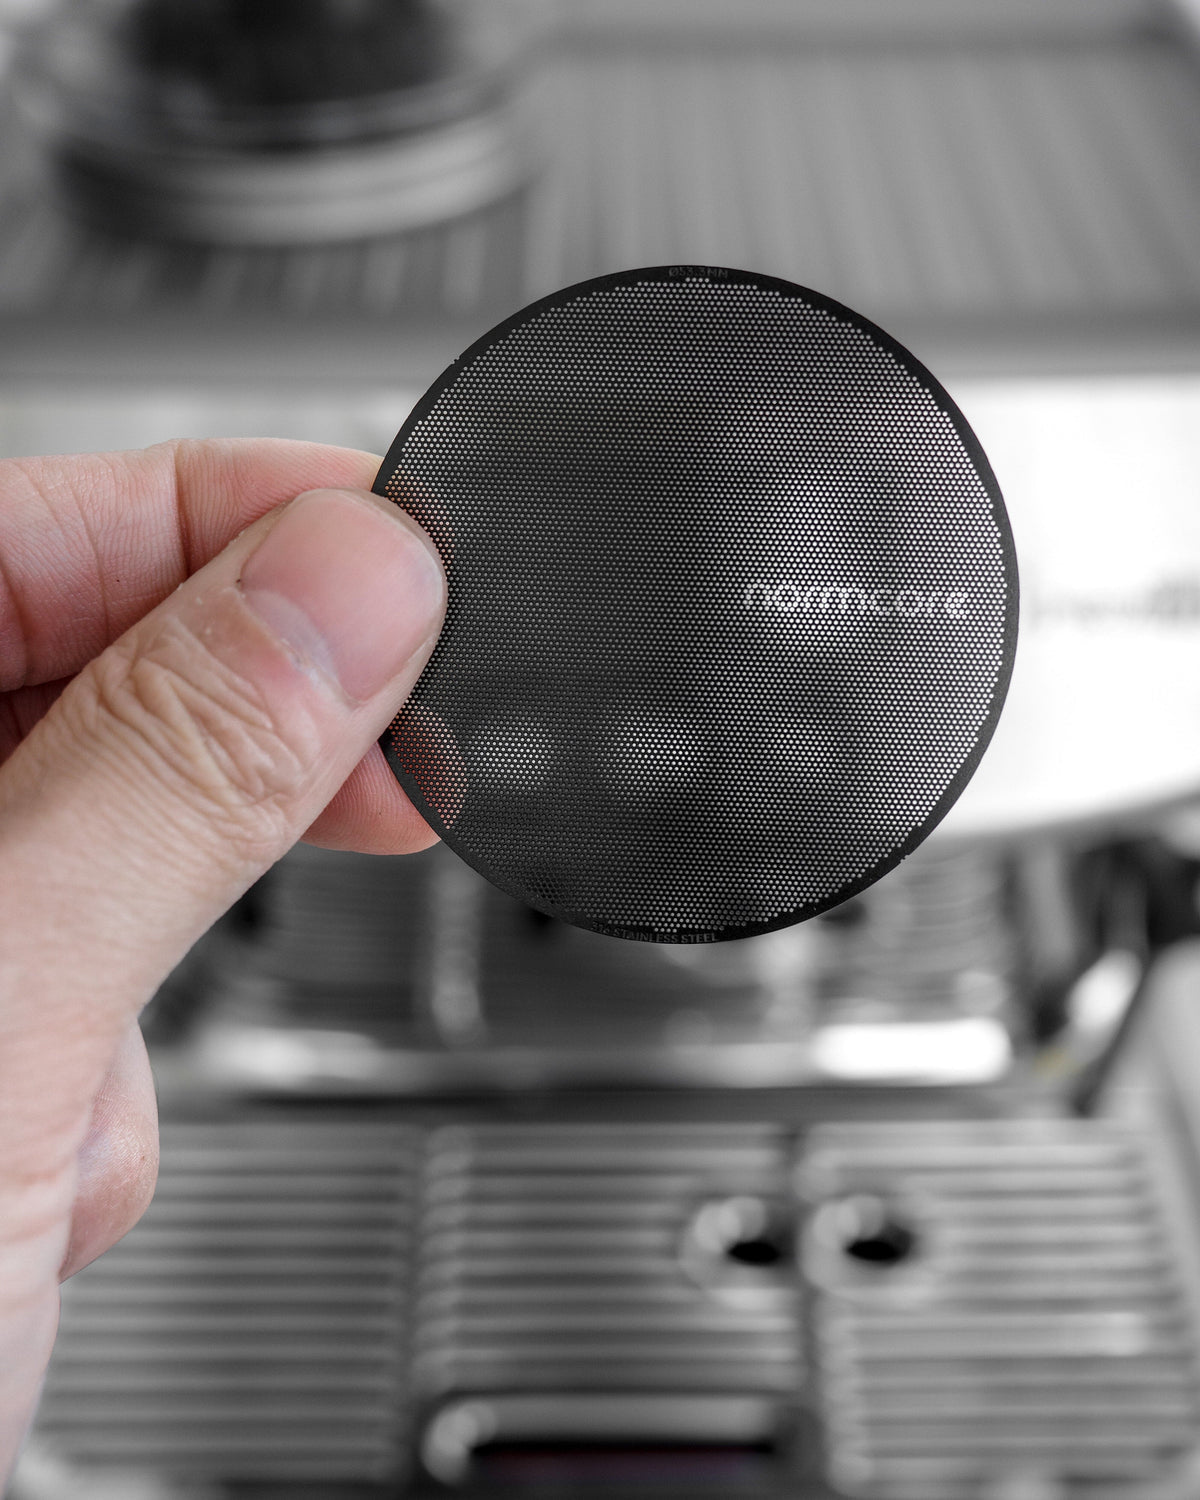 Normcore Ultra-Slim 0.2 mm Puck Screen 58.5 mm - Coffee Coaching Club